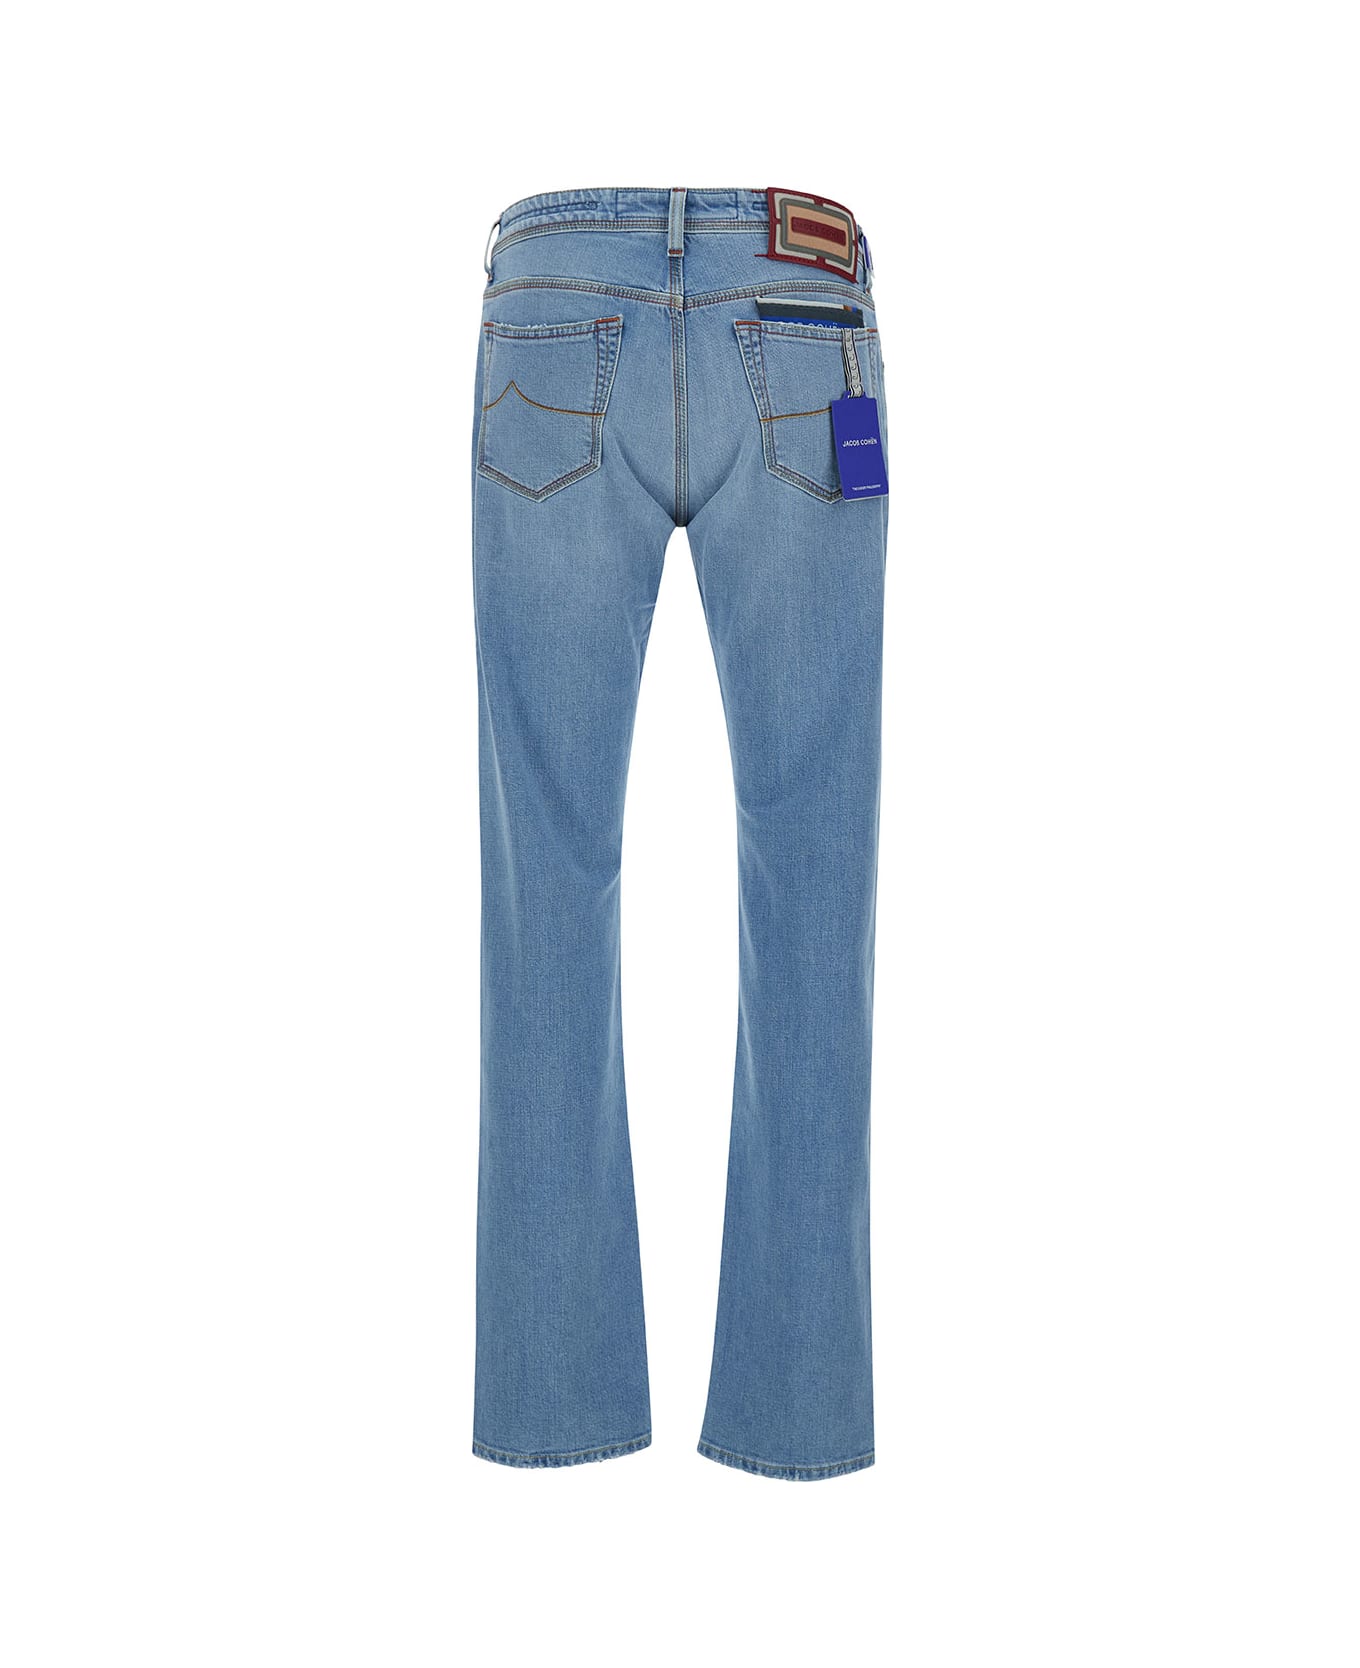 Jacob Cohen Light Blue Slim Jeans In Cotton Man - Light blue デニム